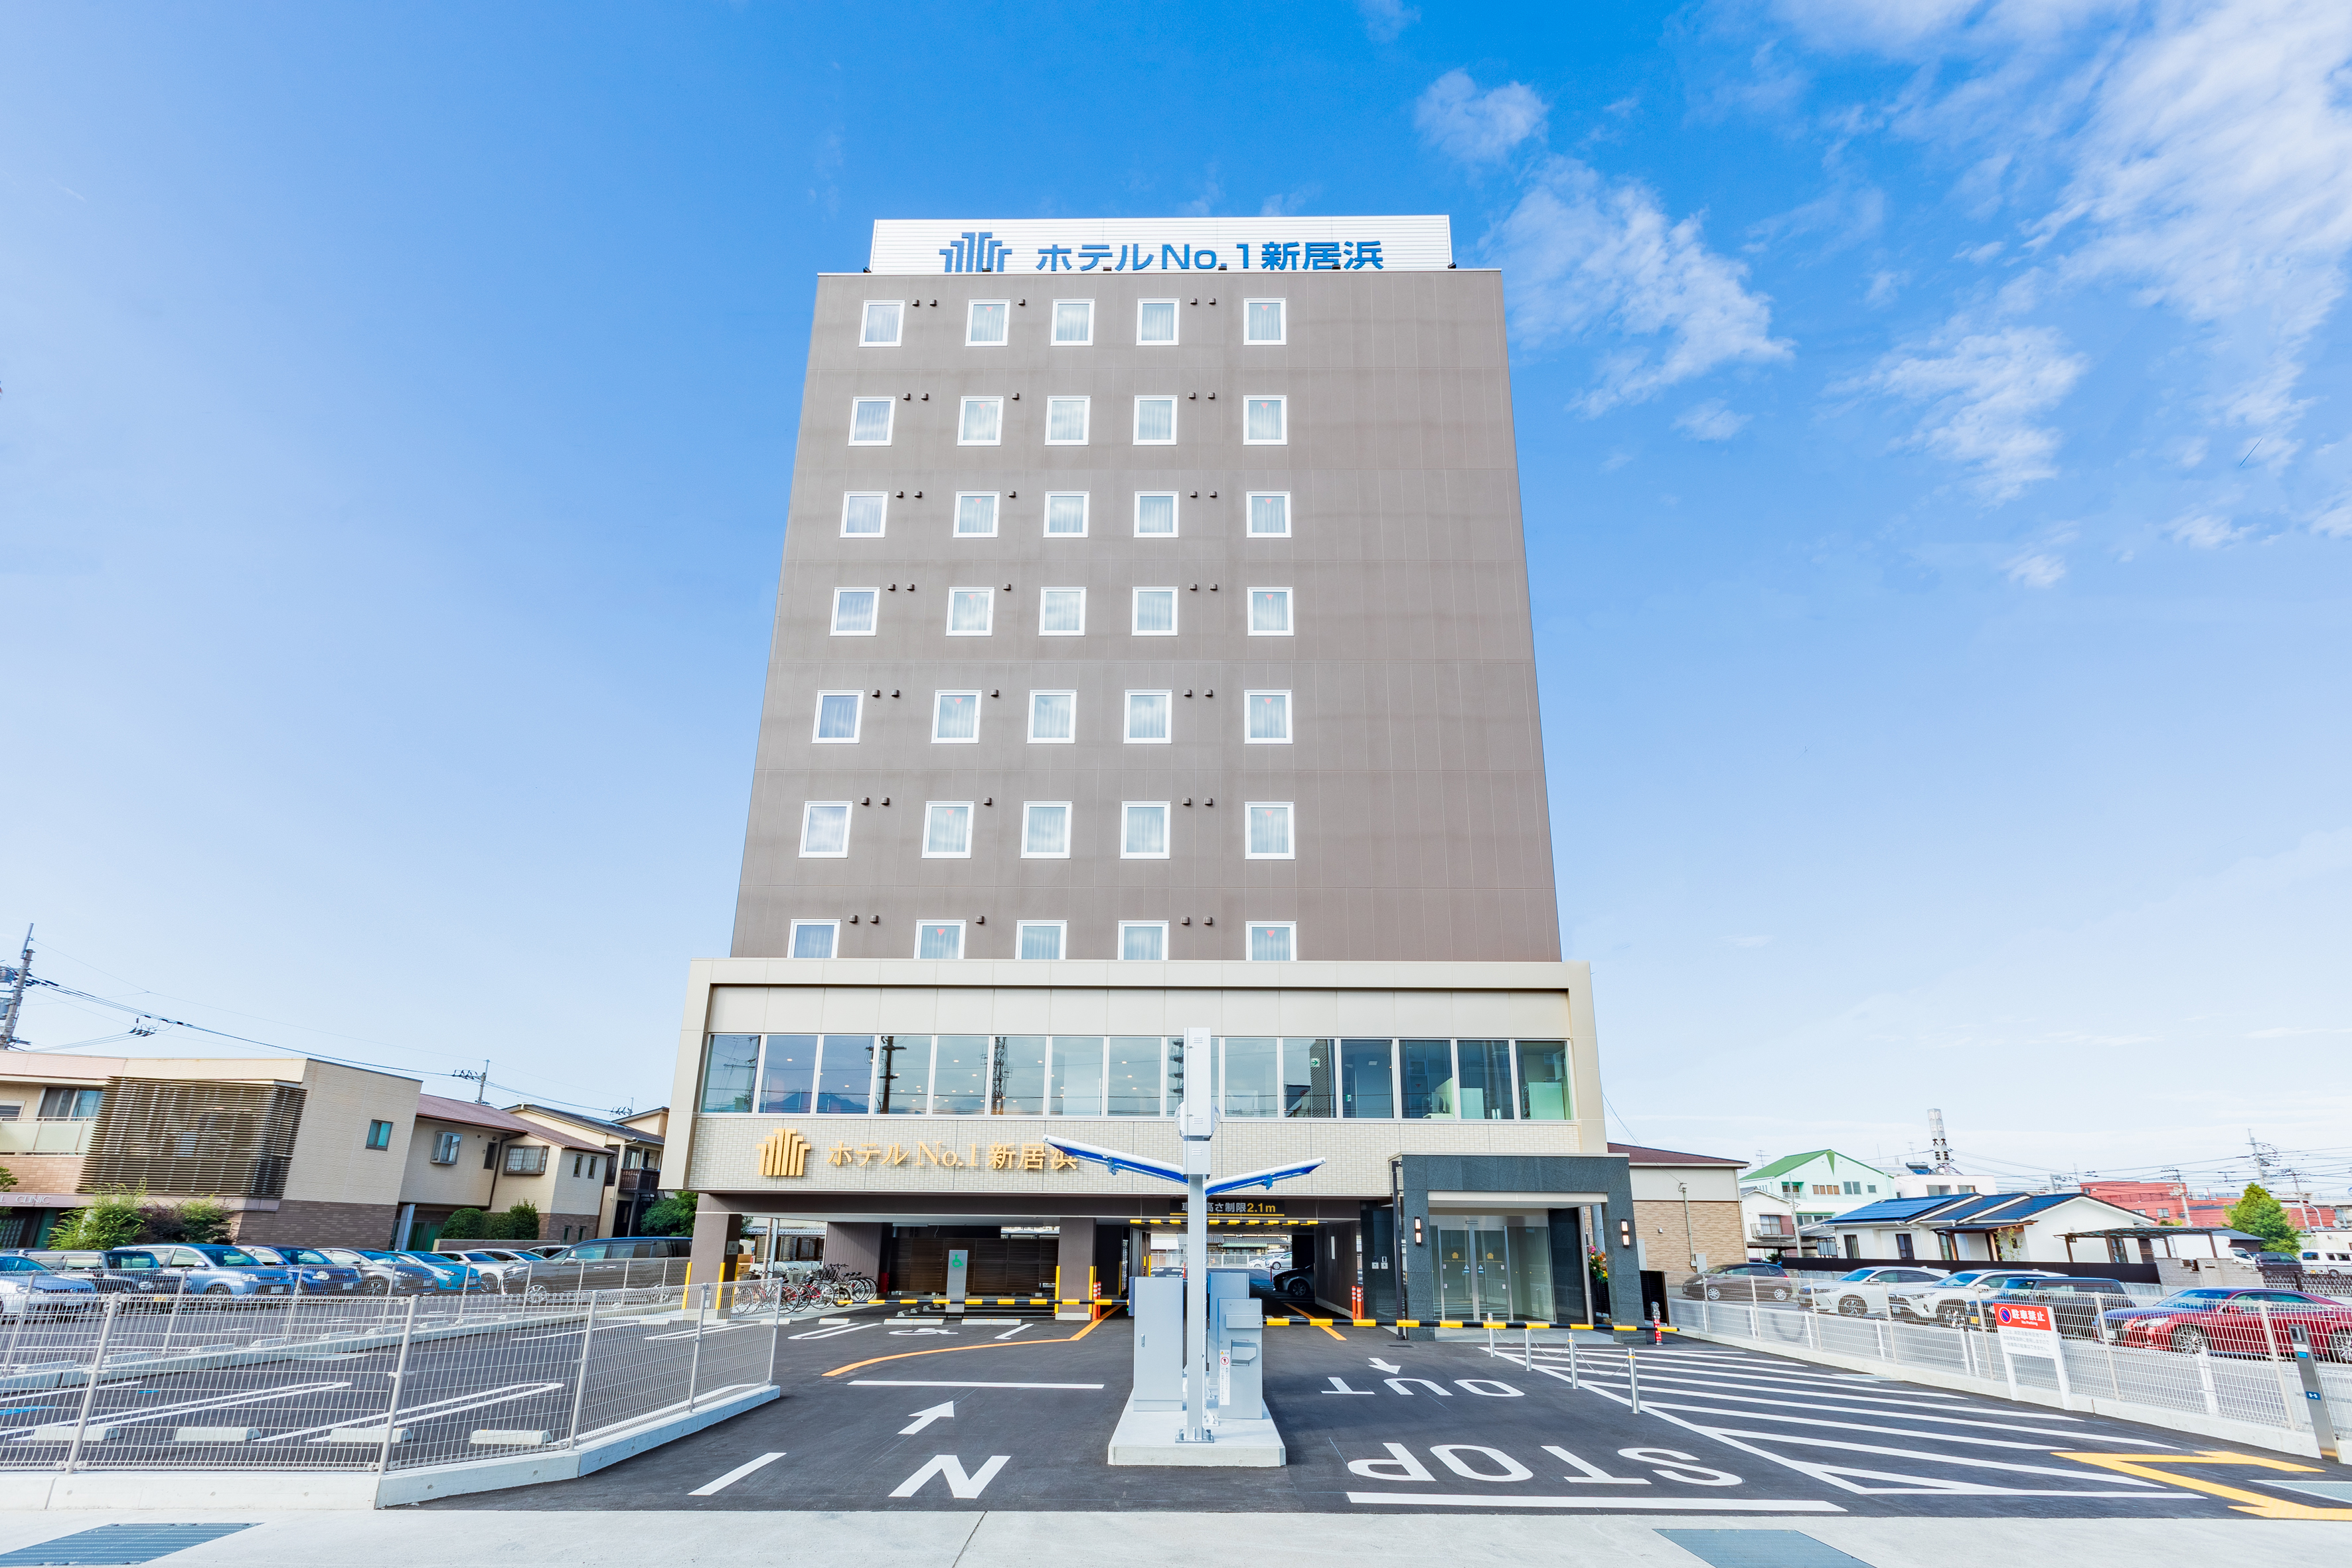 Hotel No.1 Niihama